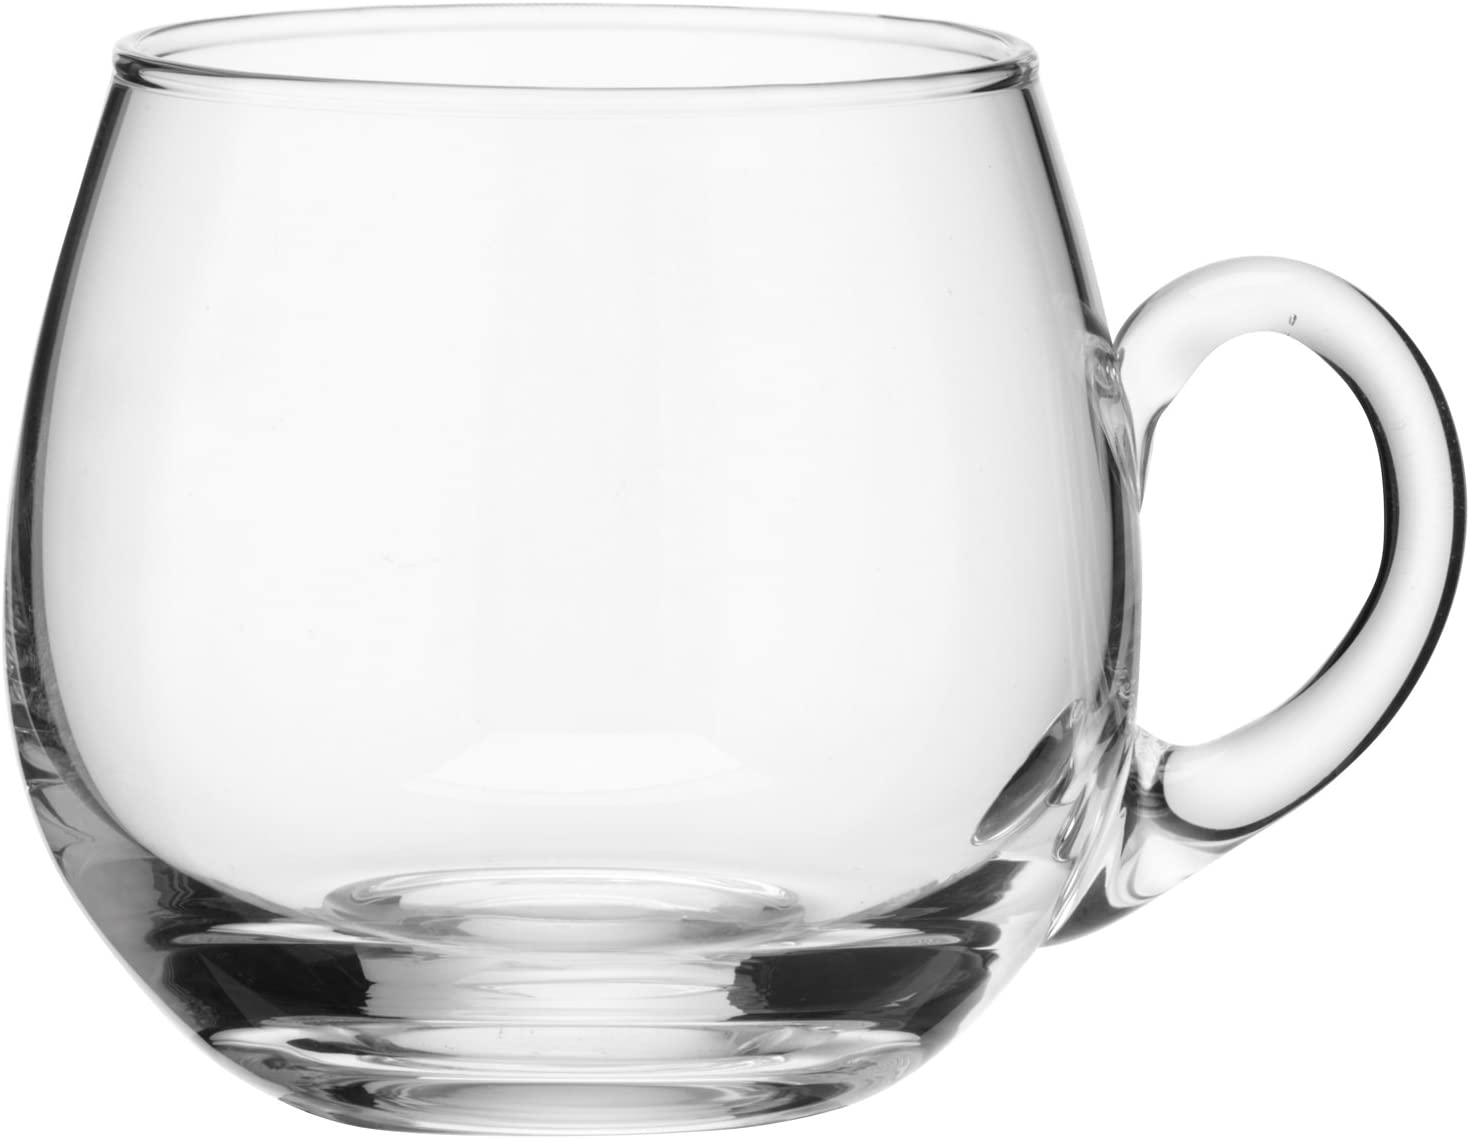 LSA International Serving Bowl Cup, 300 ml, Transparent